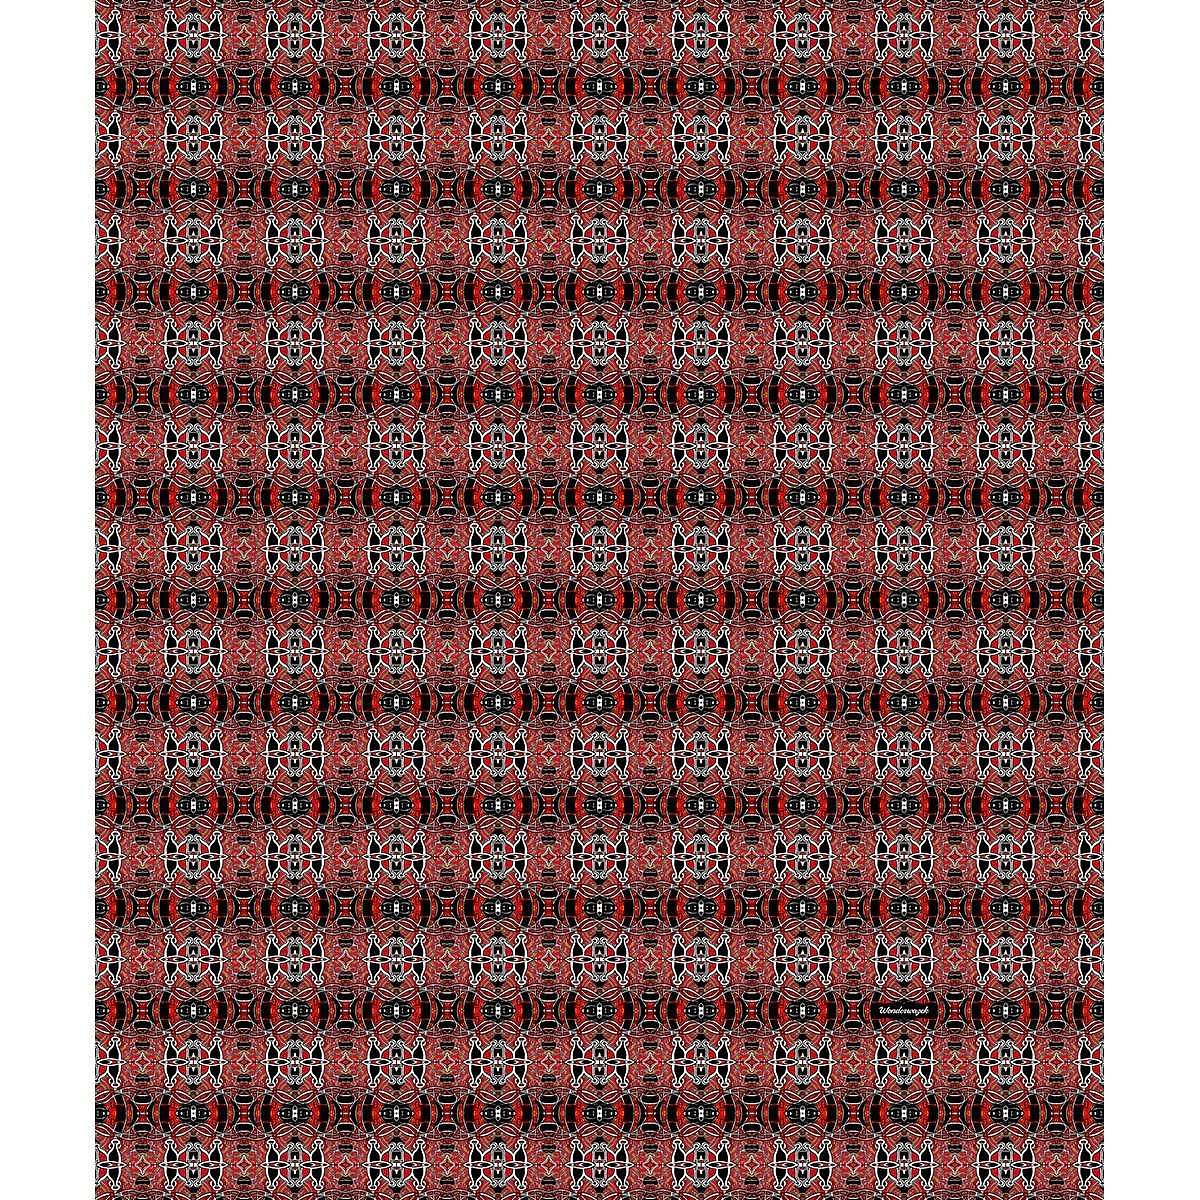 Decke • Zirkus – Variation 3, rot, schwarz, weiß - Wonderwazek